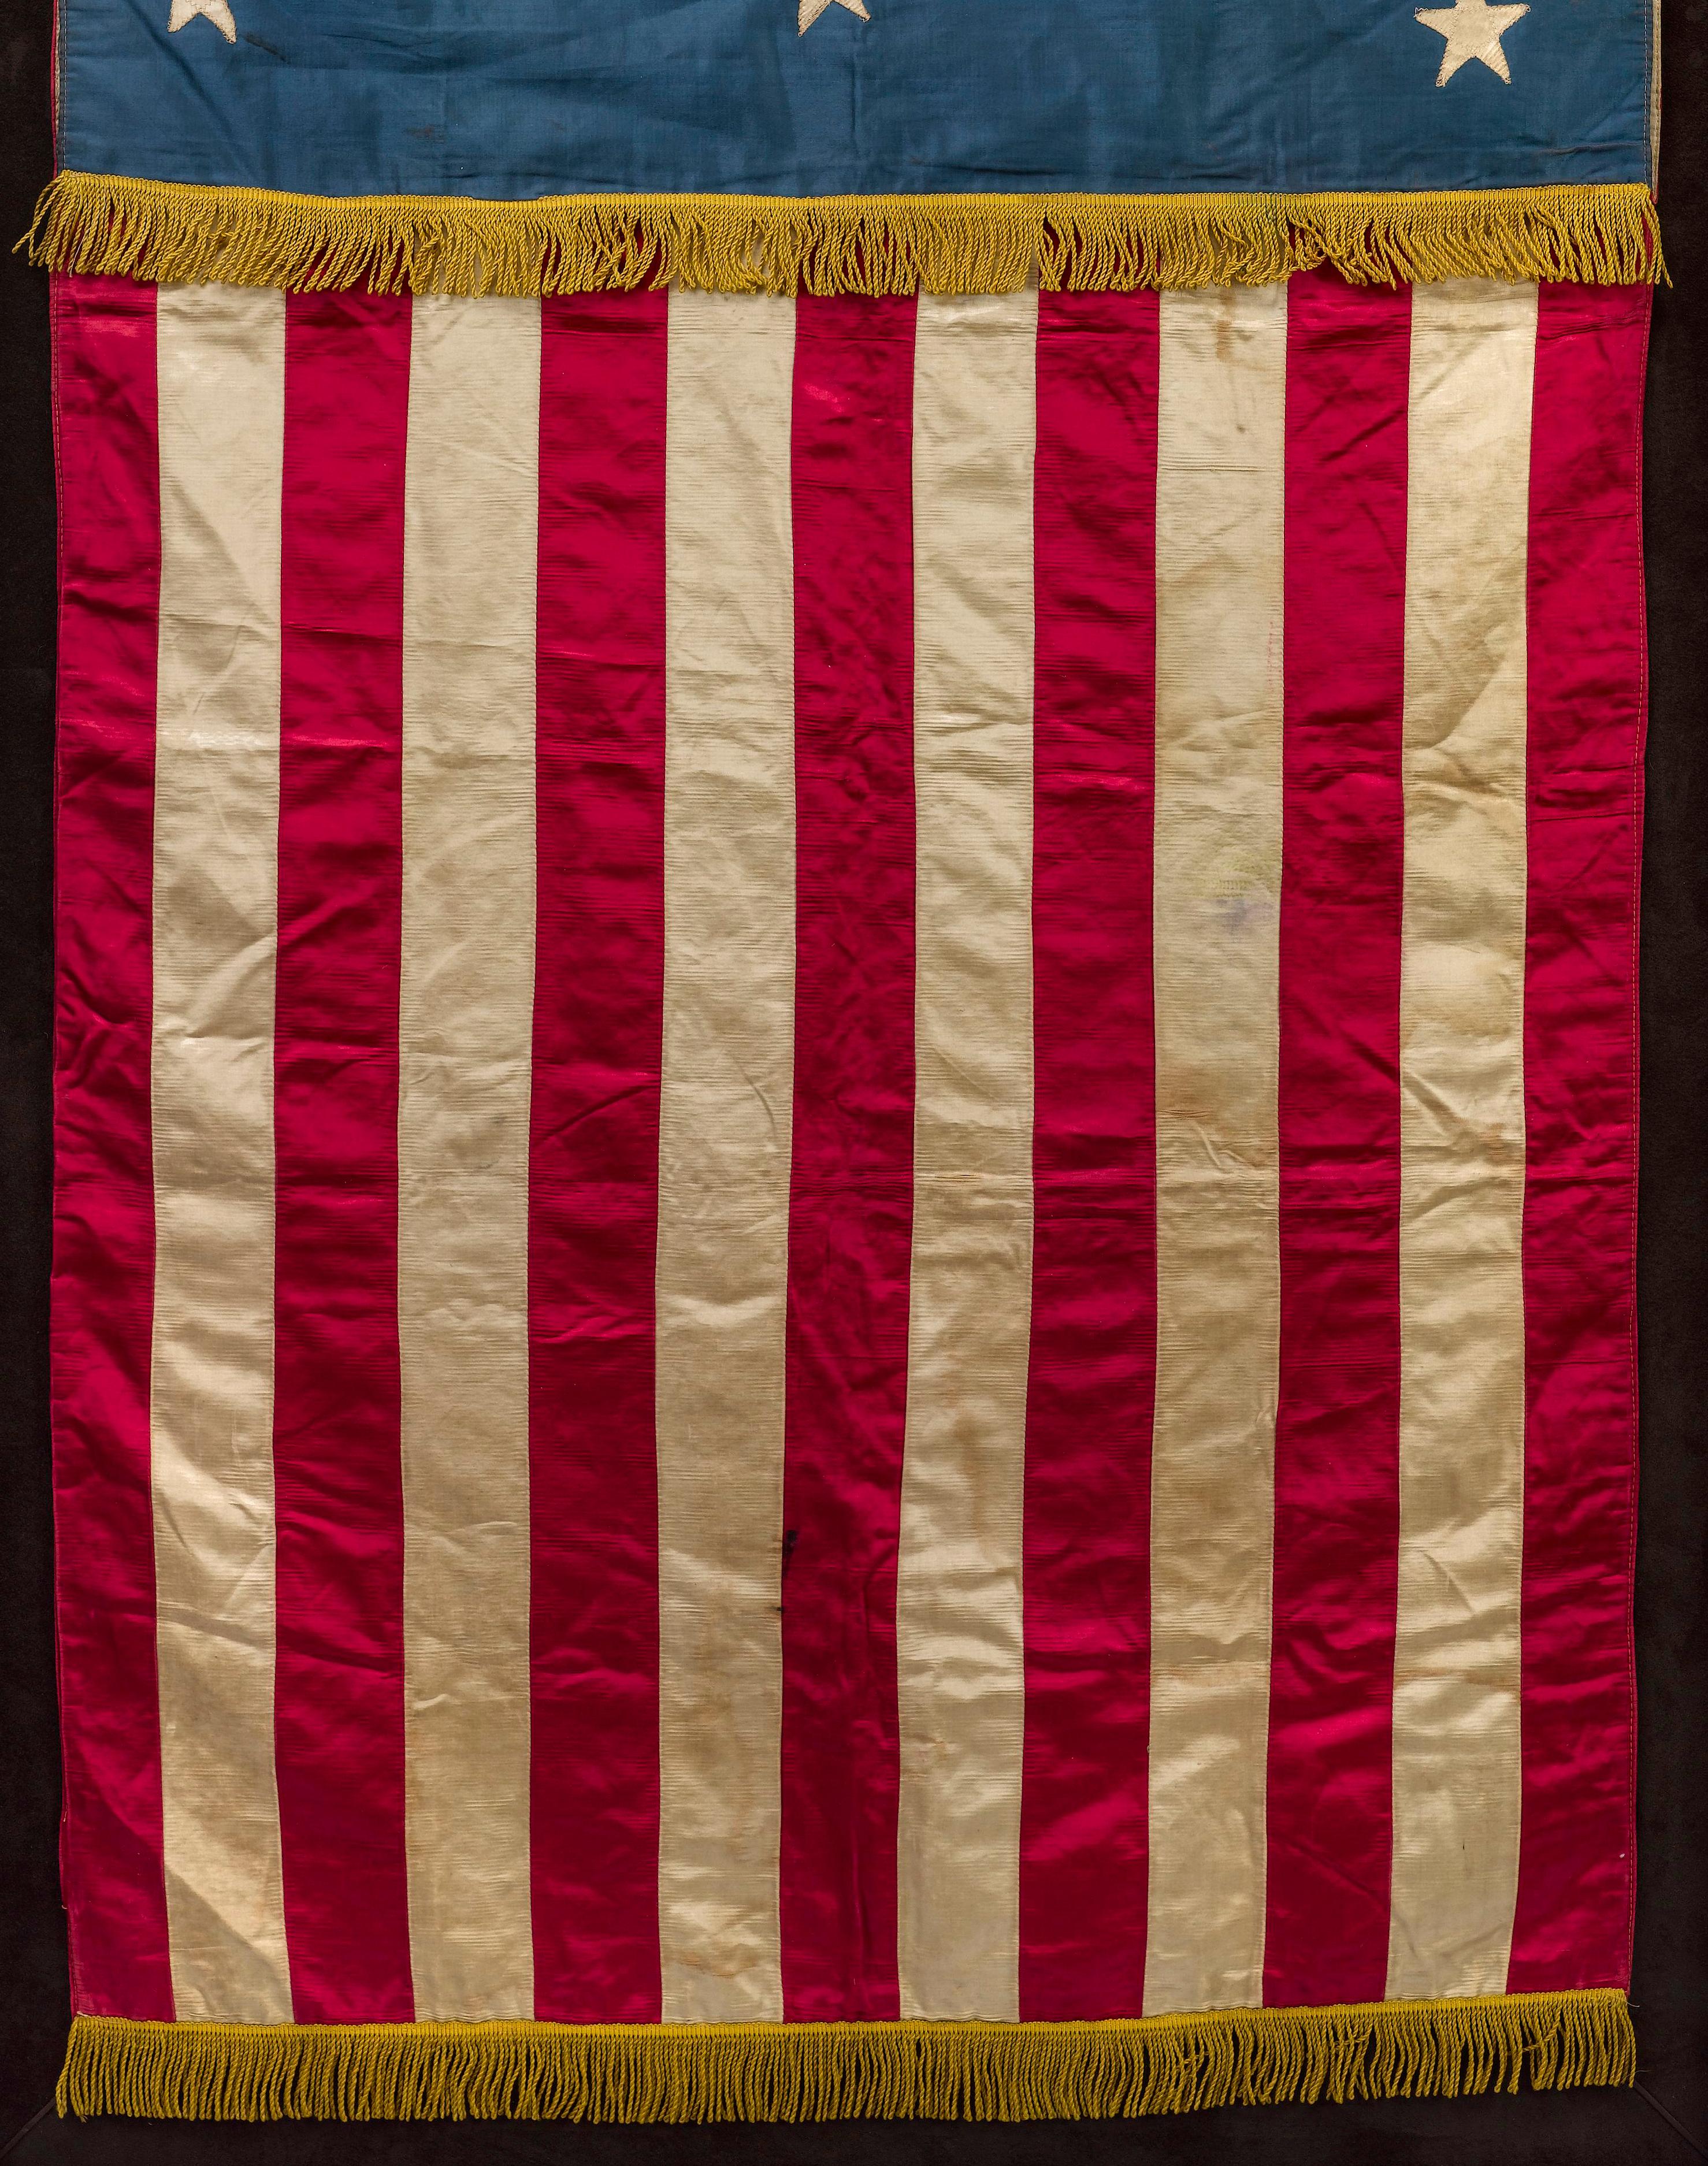 19th Century 13-Star American Flag Silk Banner, circa 1876-1900